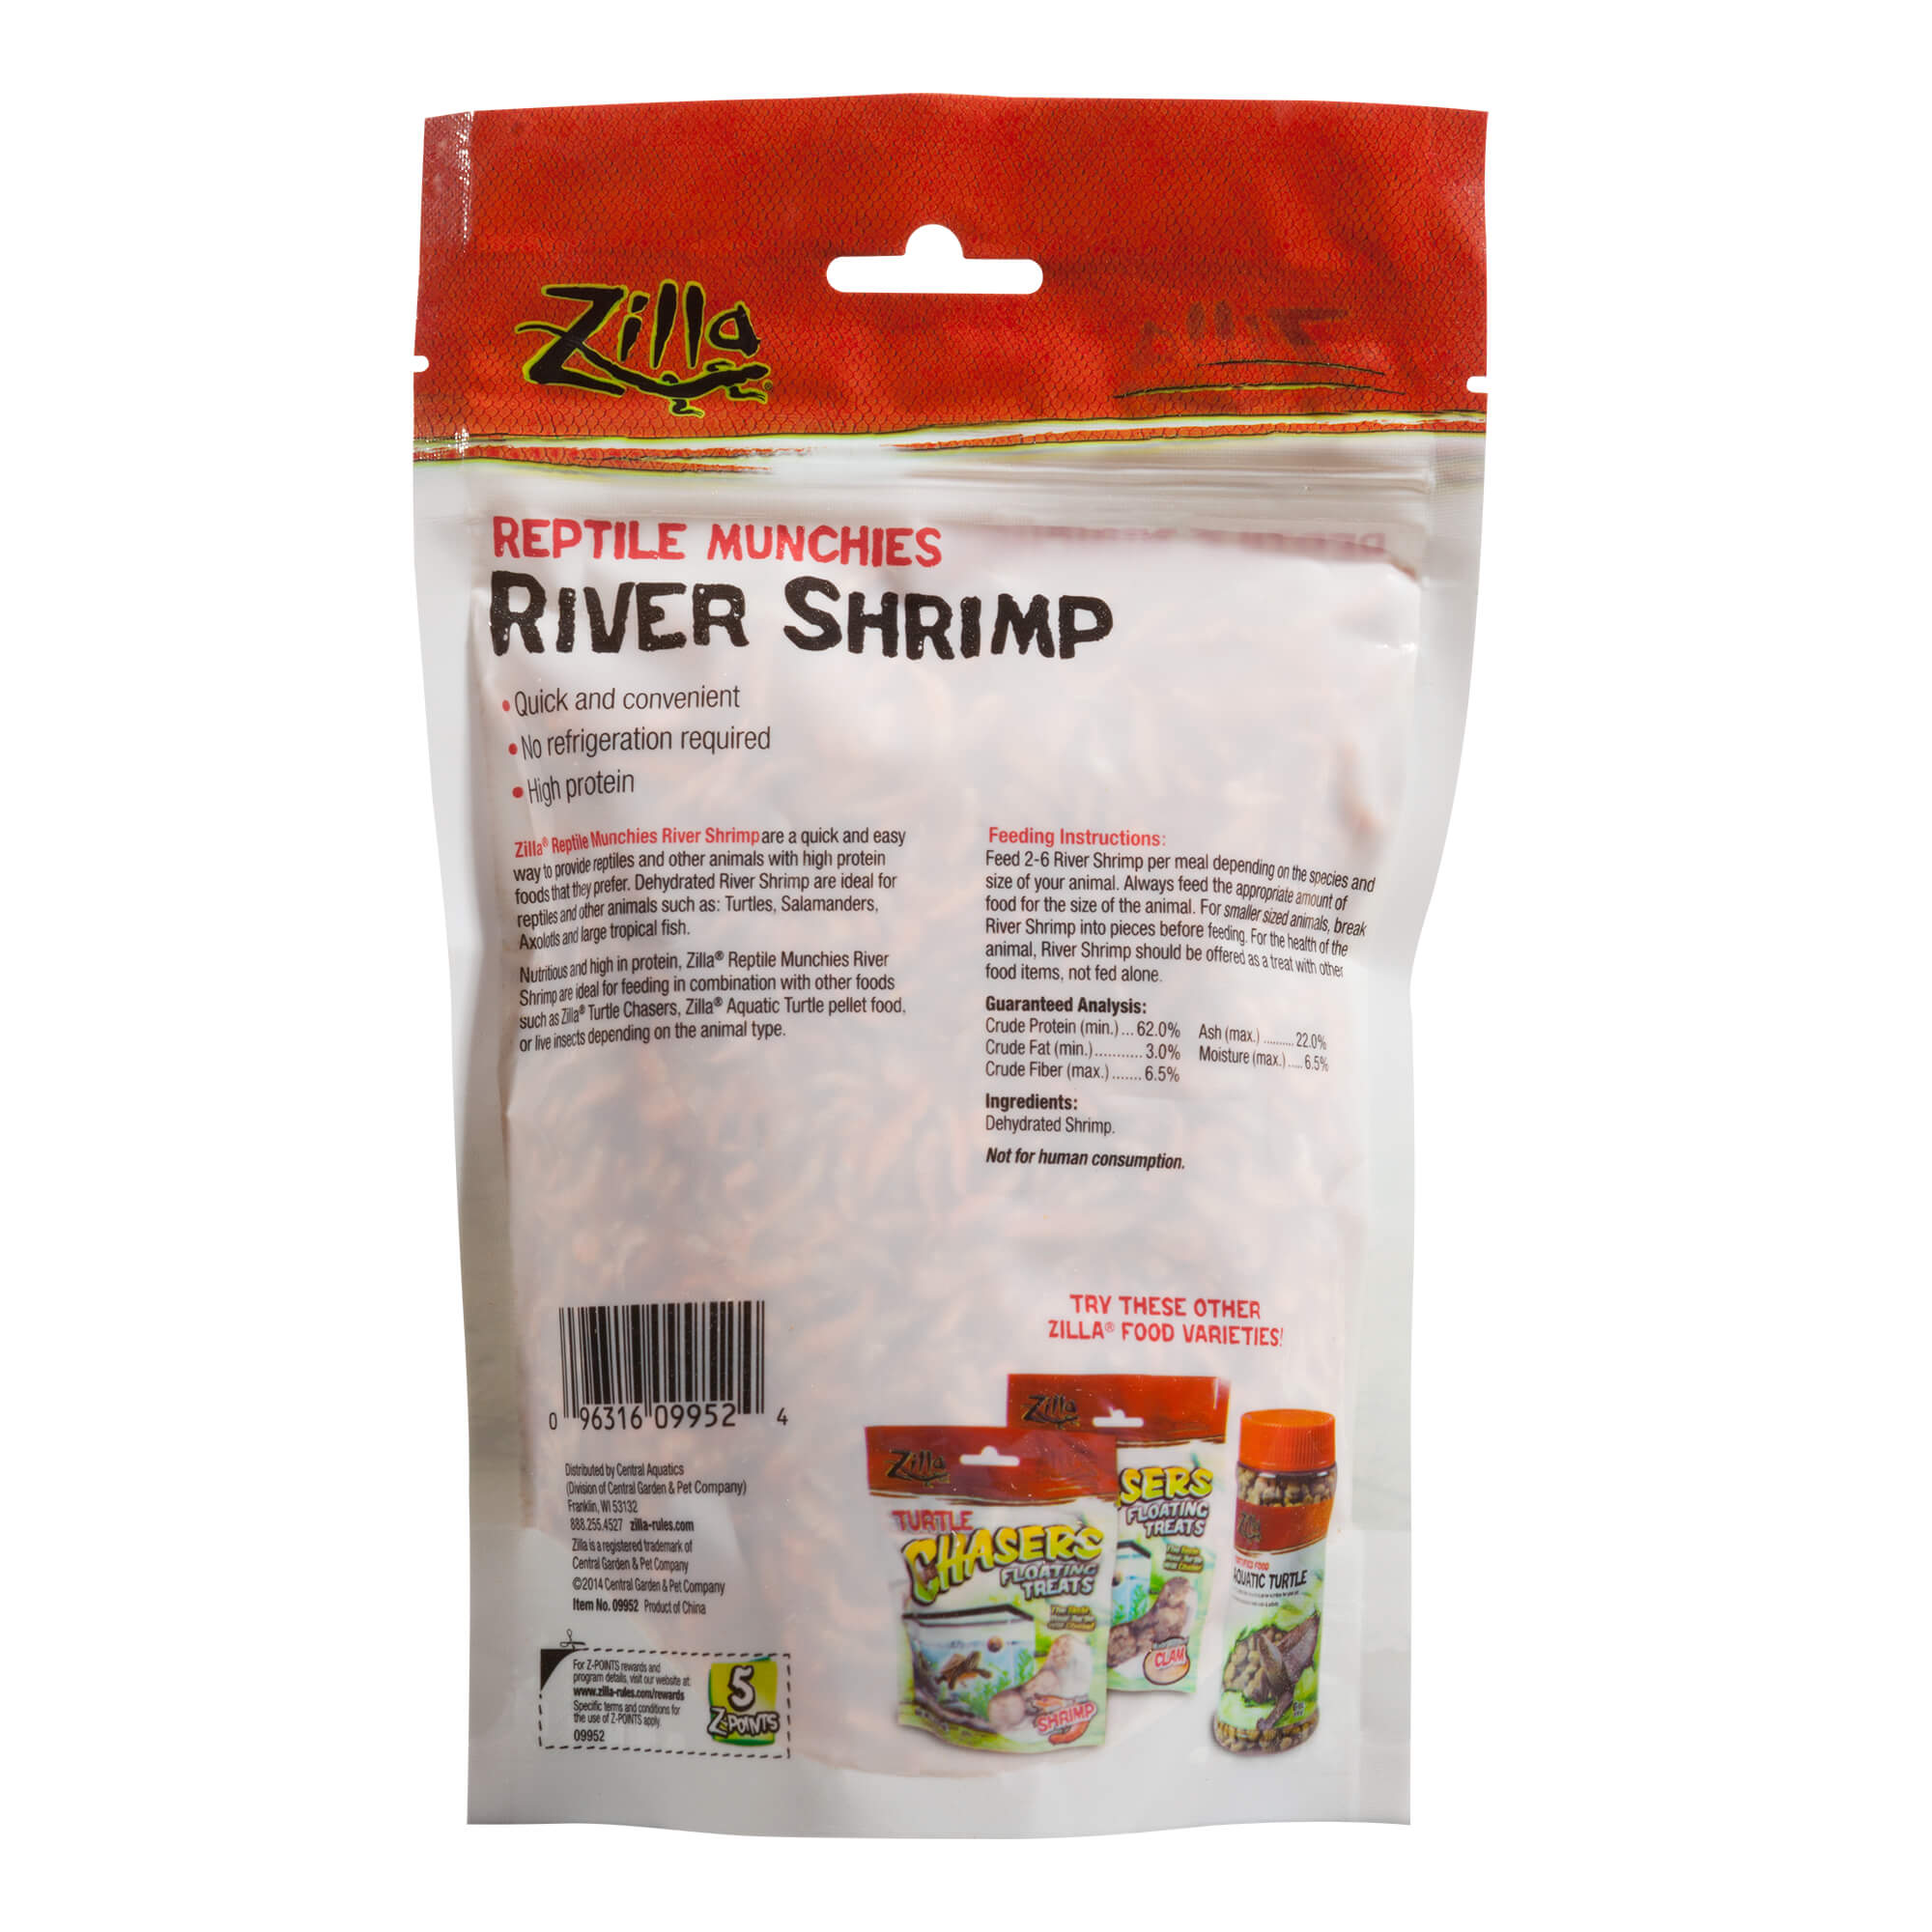 Zilla River Shrimp Reptile Munchies Ingredients List